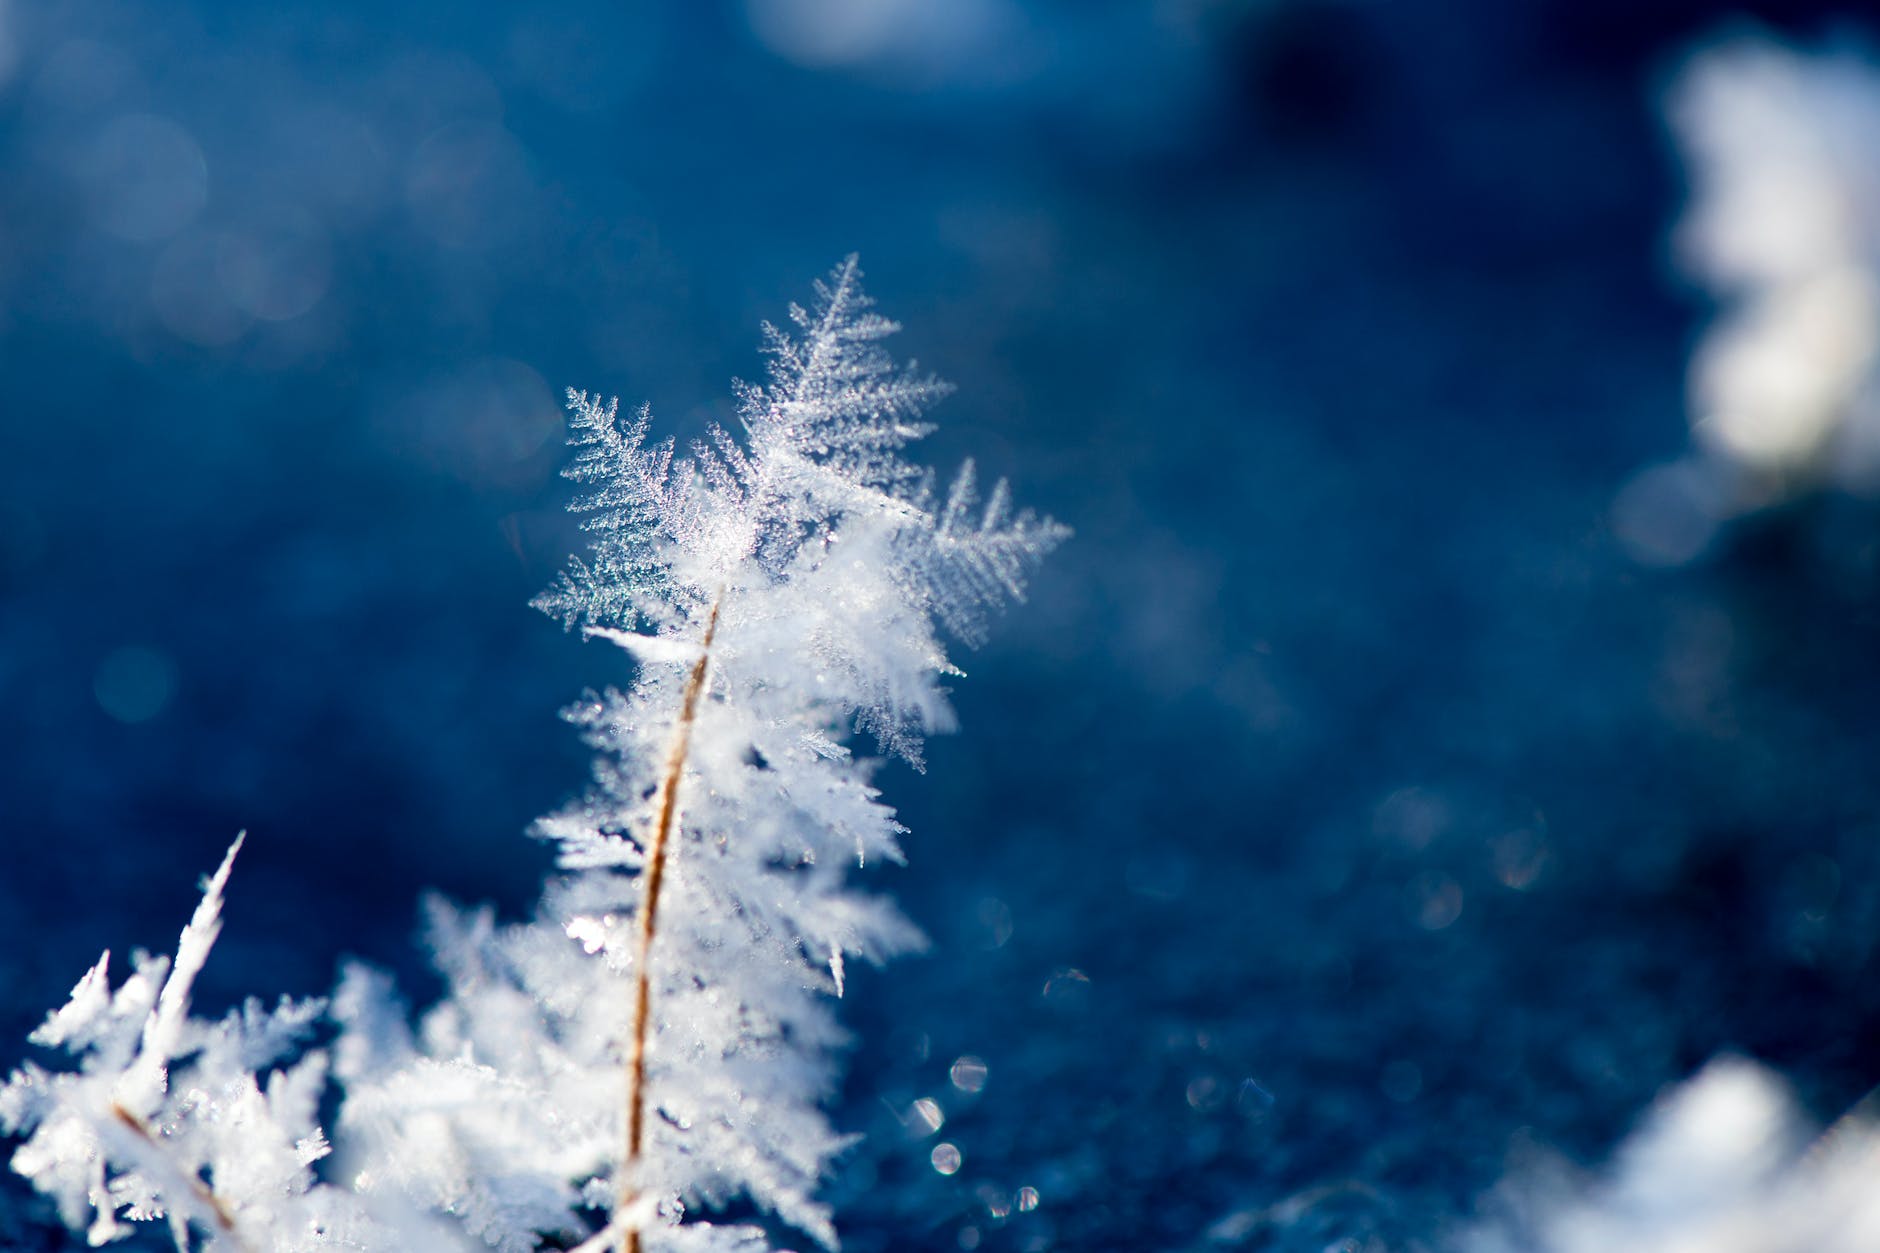 macro photography of snowflakes